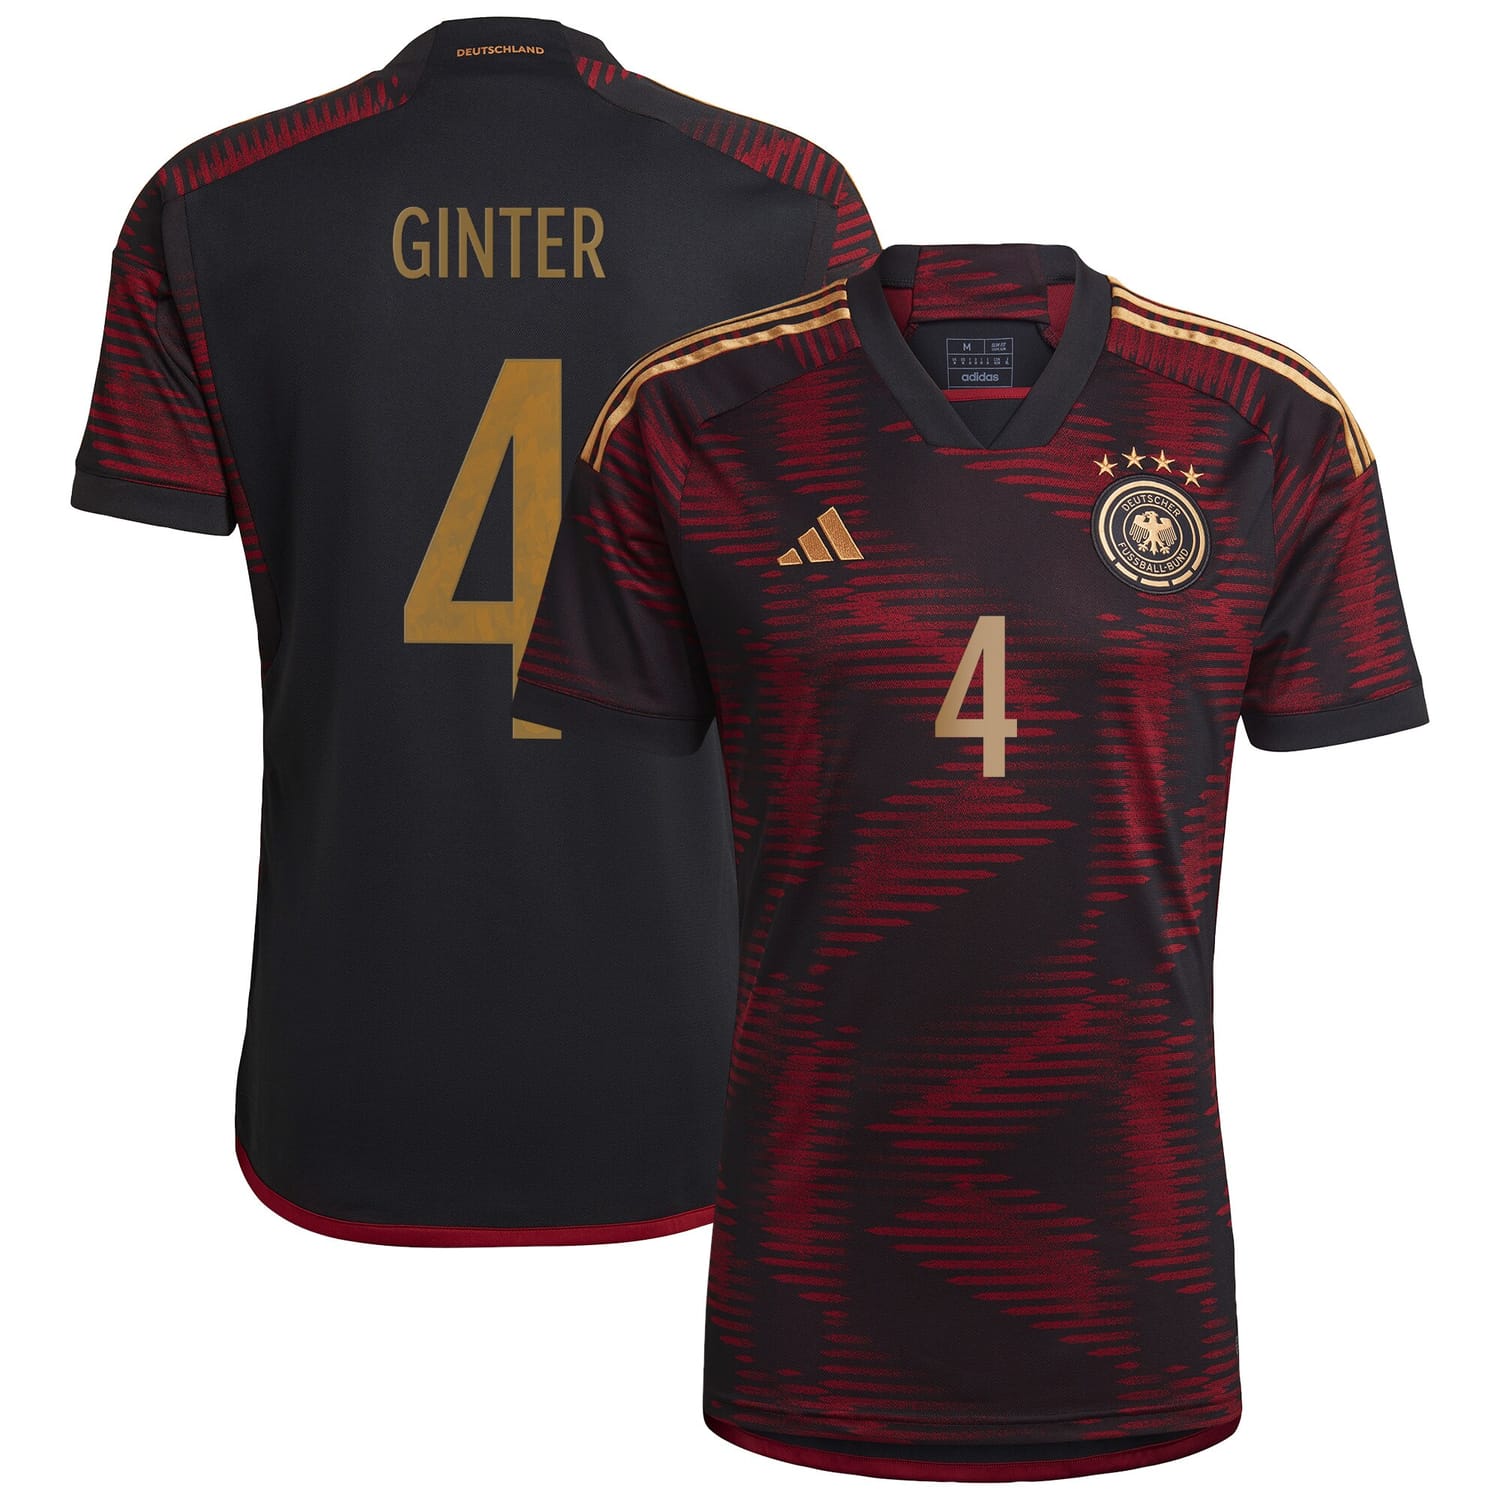 Germany National Team Away Jersey Shirt player Matthias Ginter 4 printing for Men